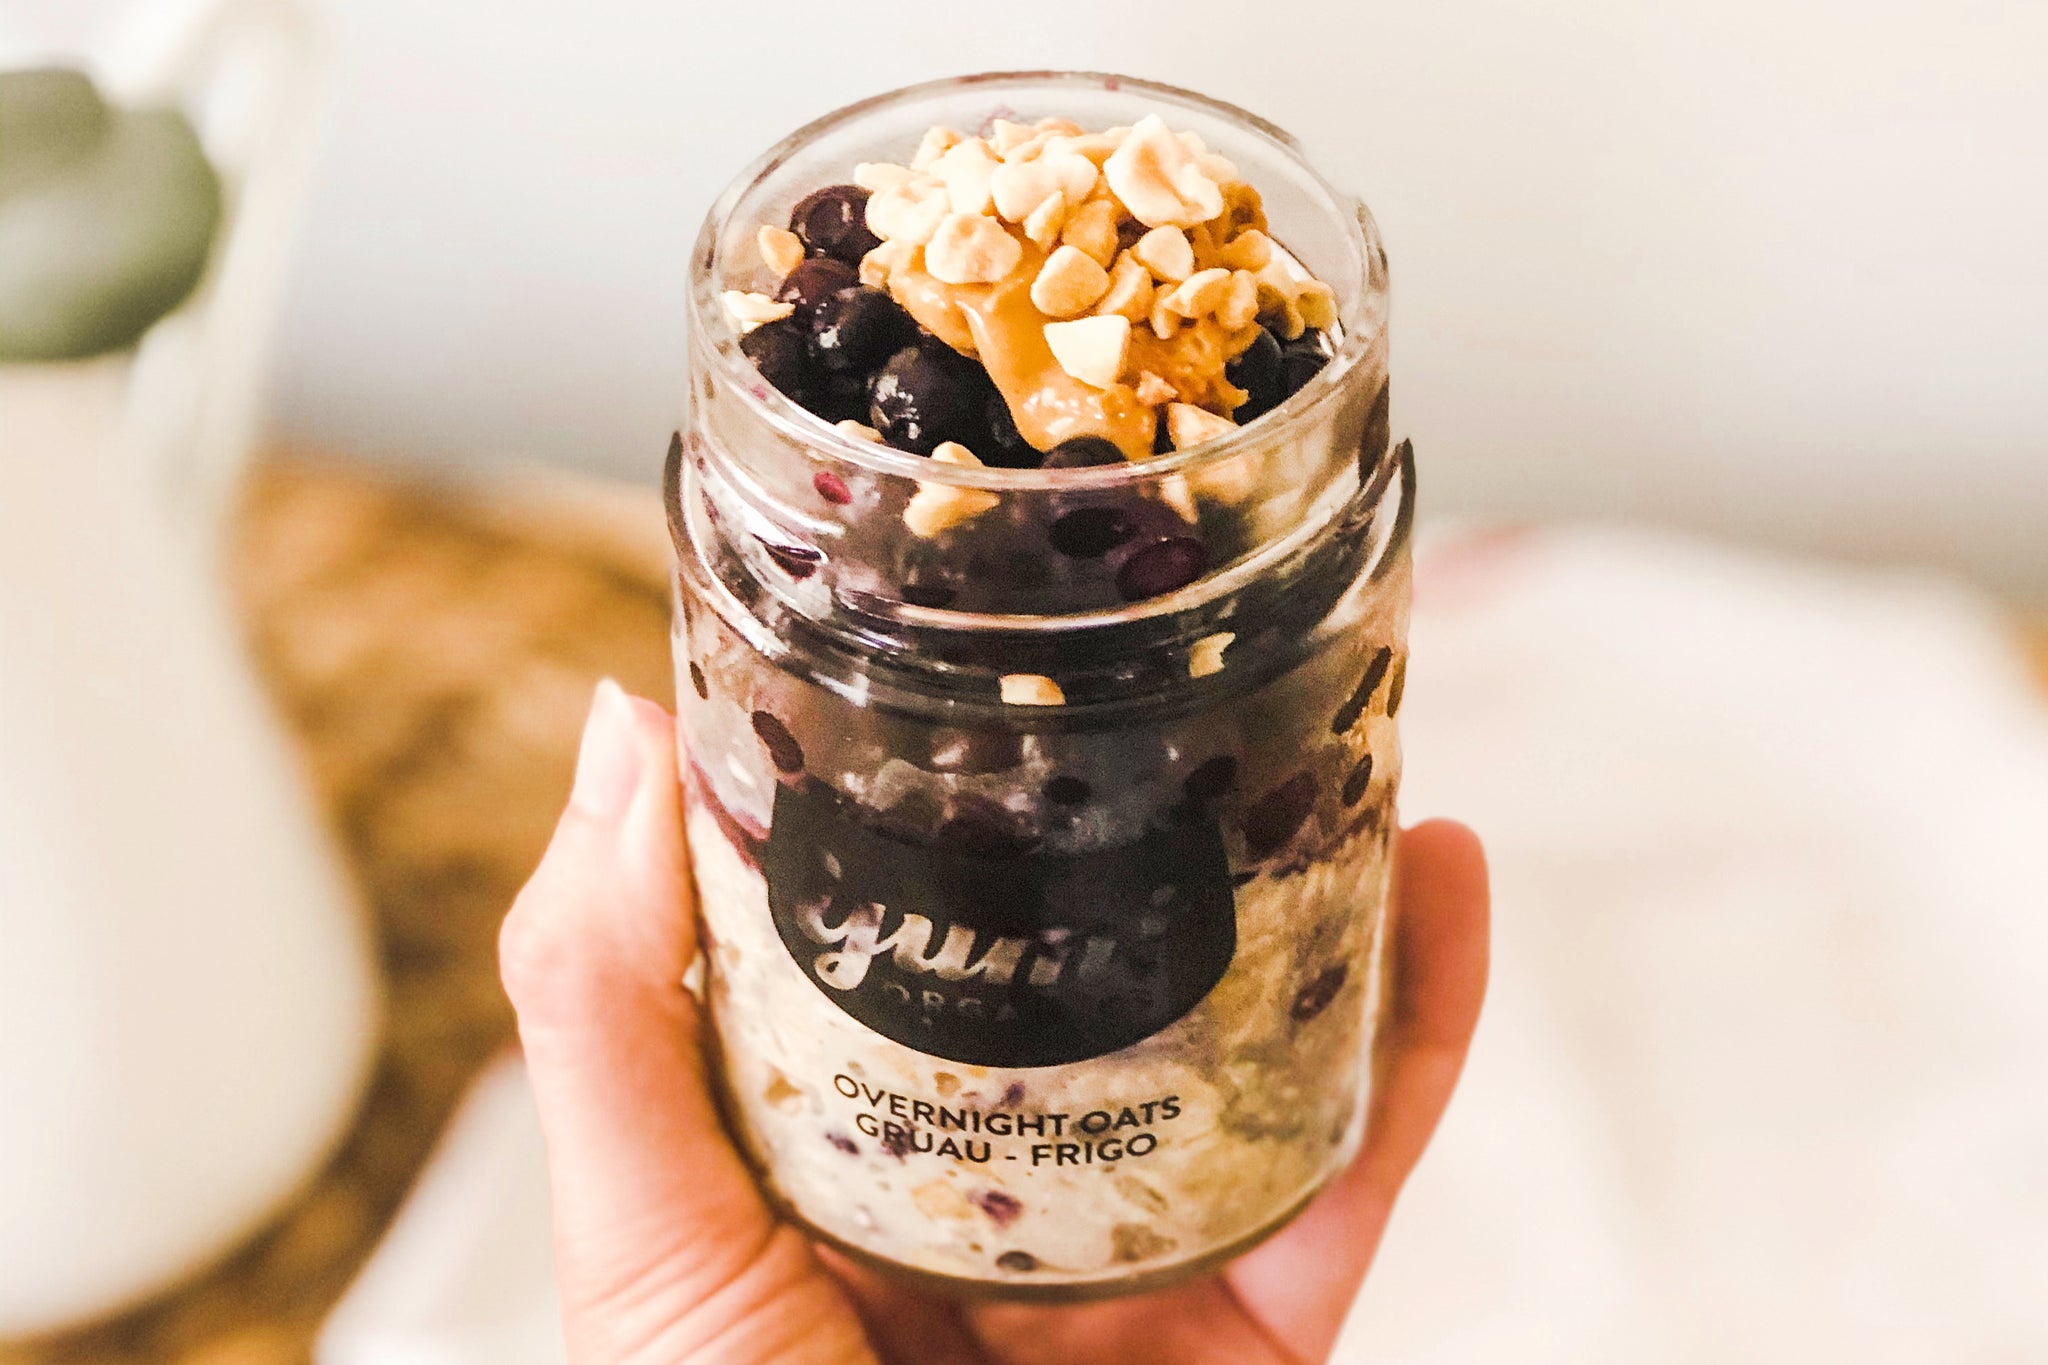 Crunchy Peanut Butter & Blueberry Overnight Oats - YUMi ORGANICS